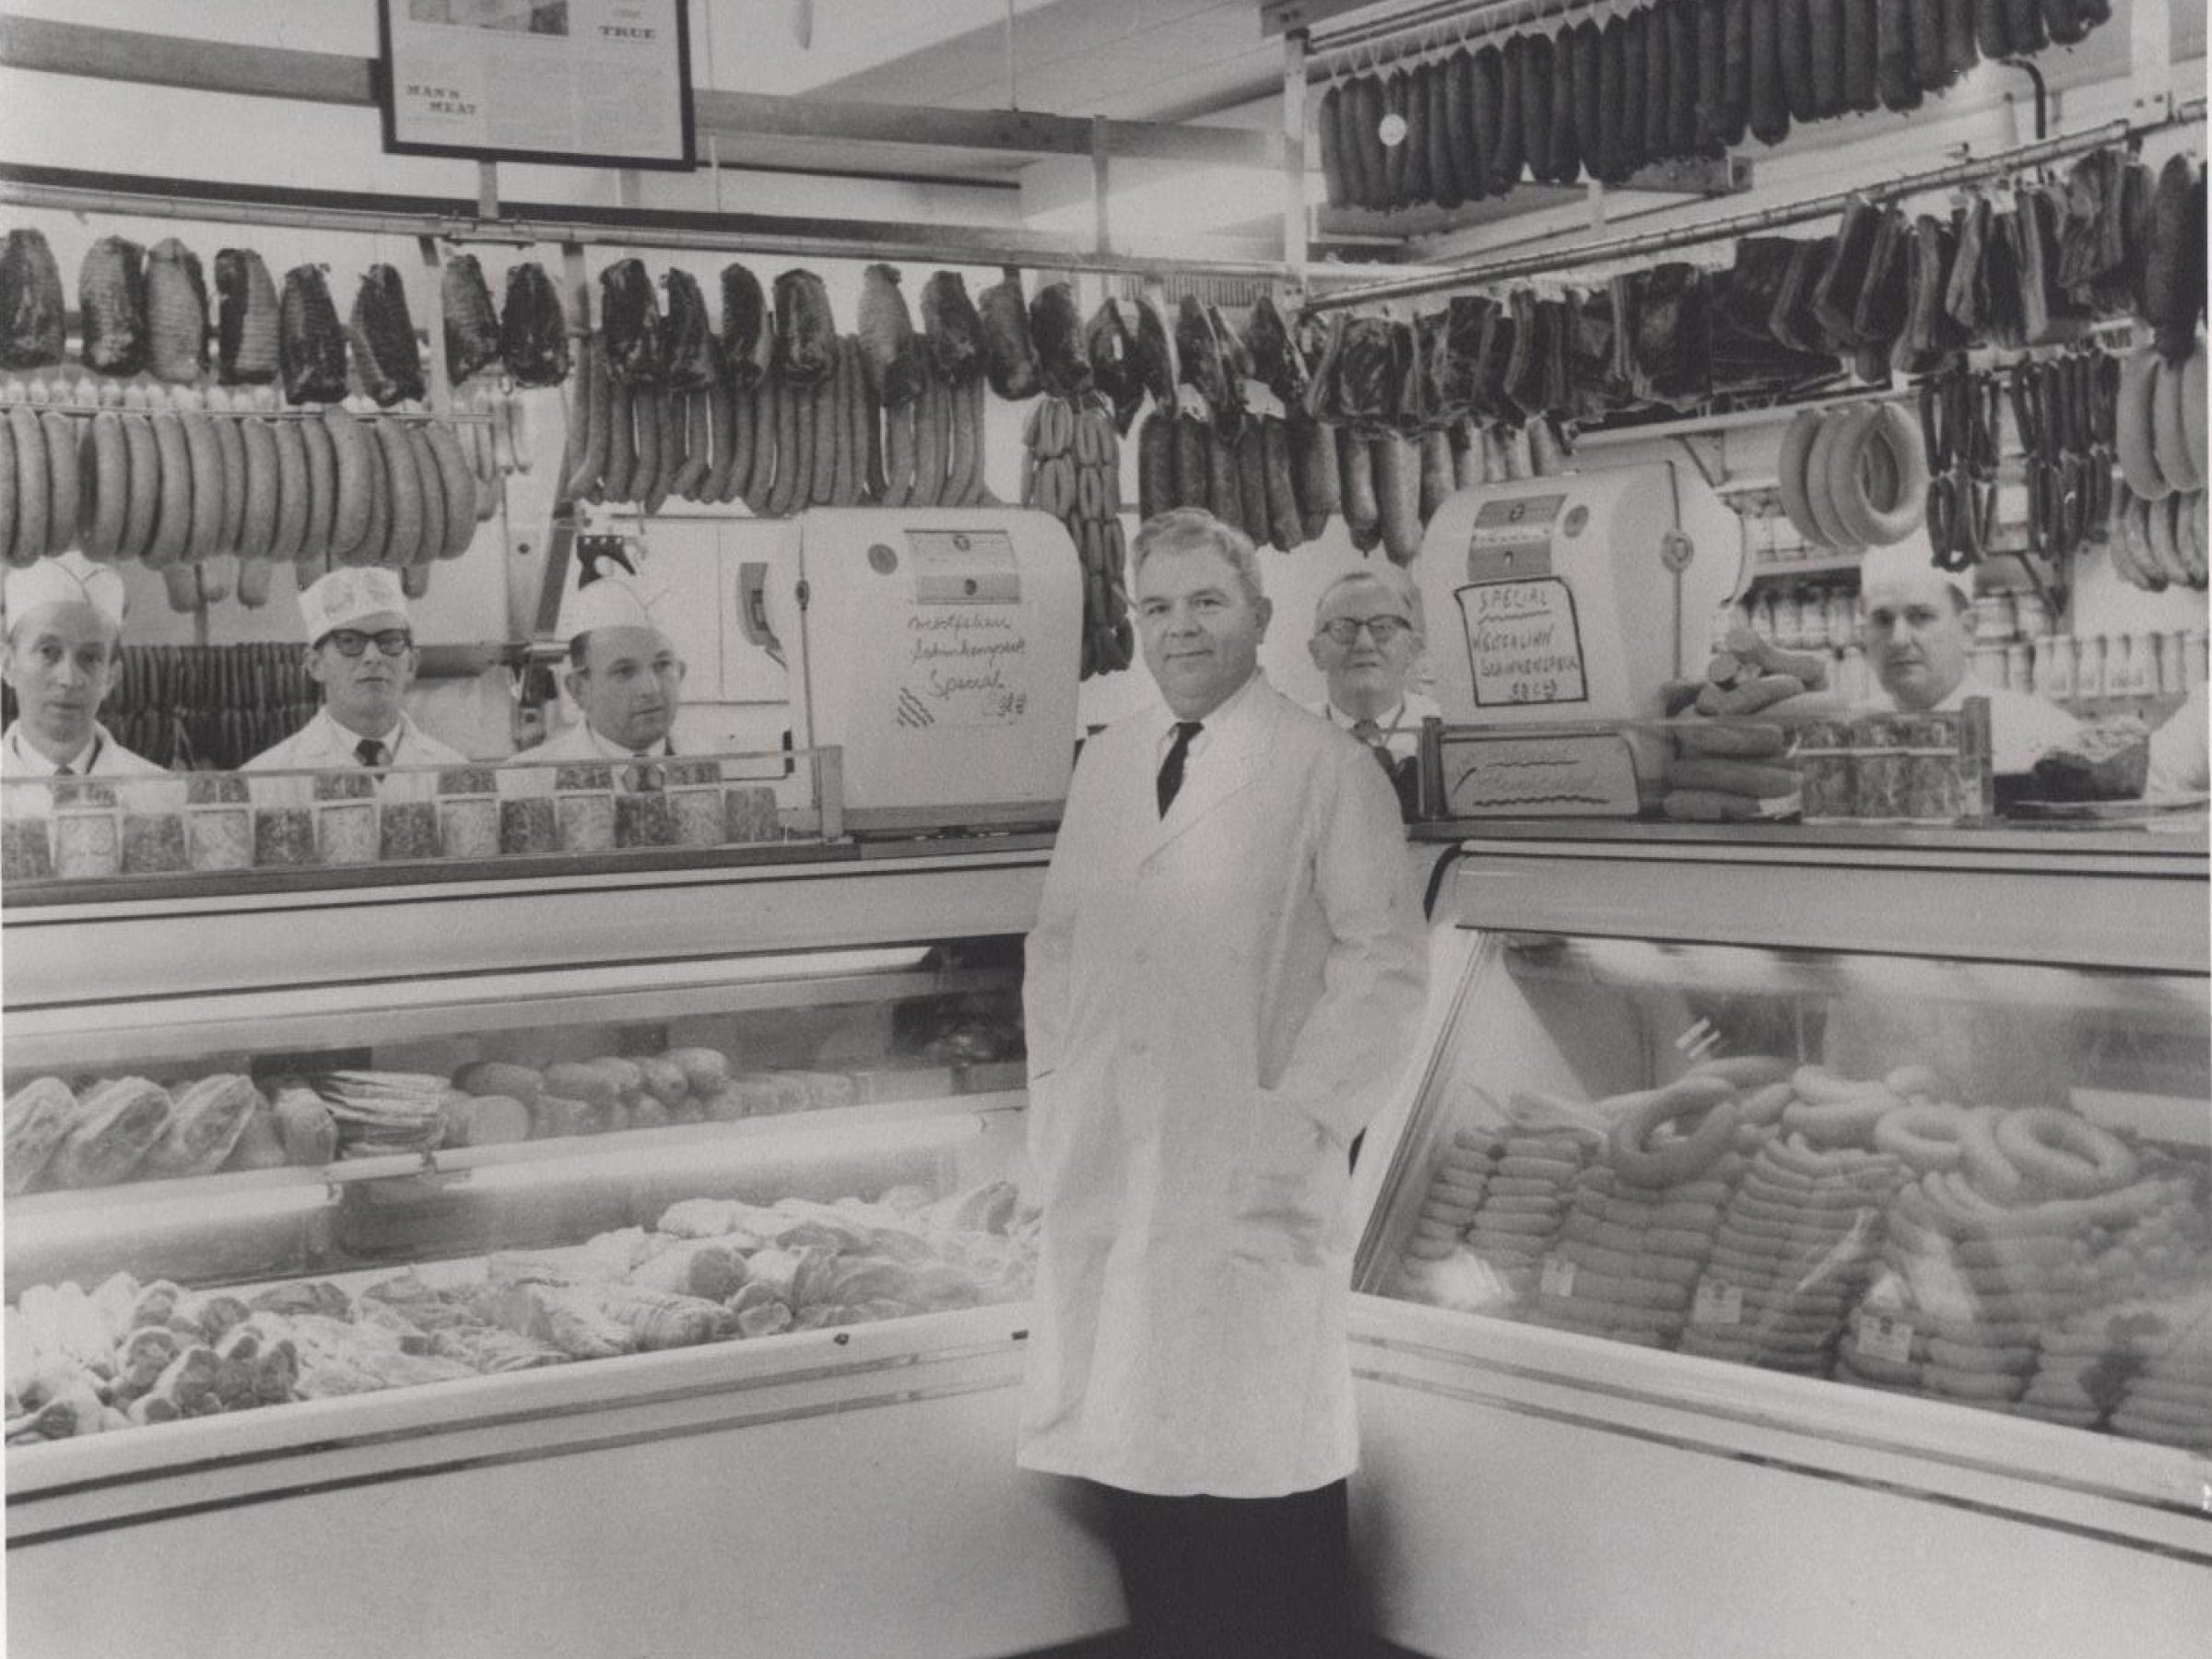 Ferdinand Schaller and team in original butcher store